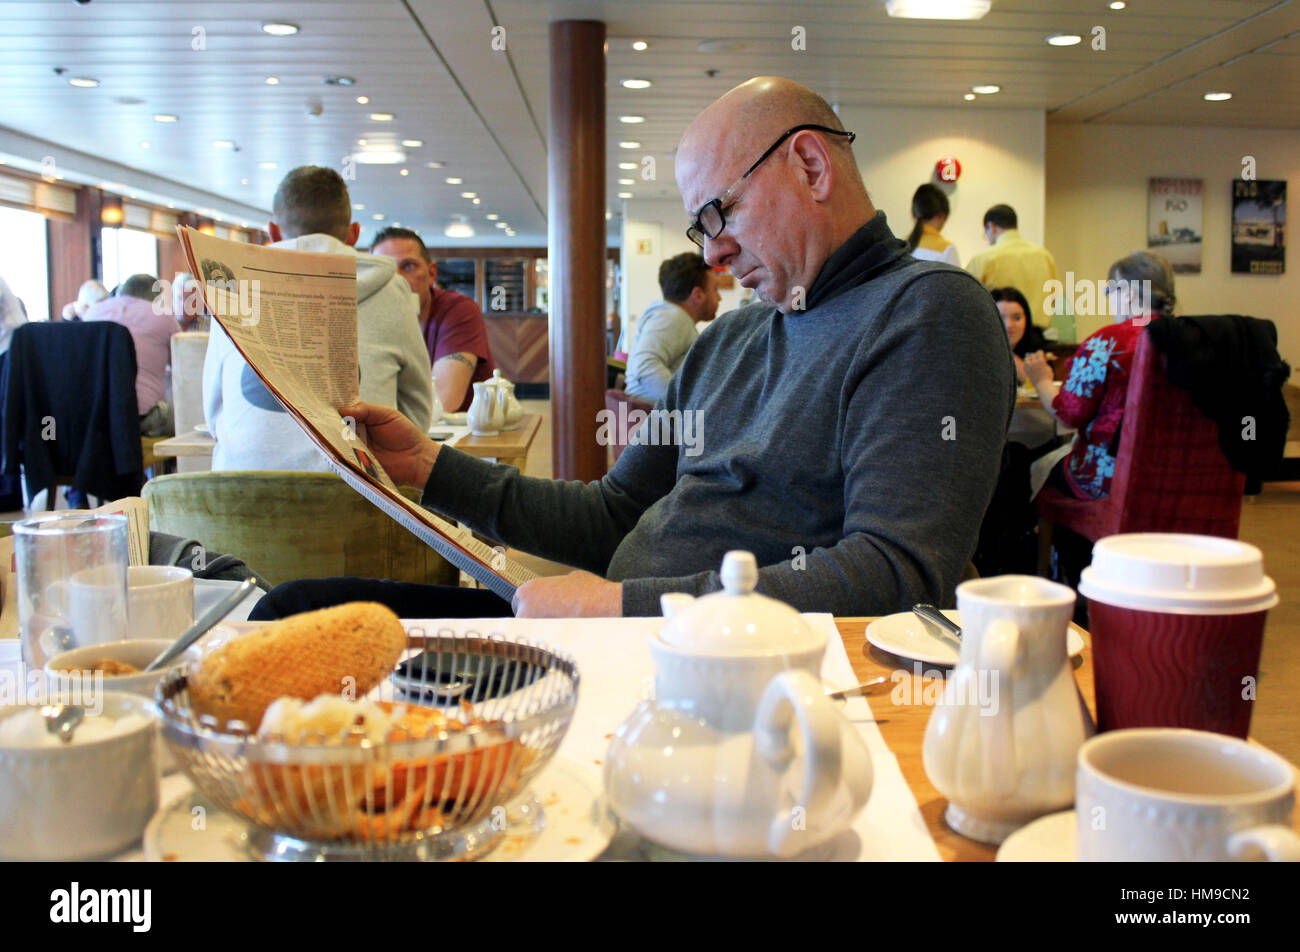 Applying Mann liest Zeitung, während beim Frühstück an Bord der Fähre. Stockfoto